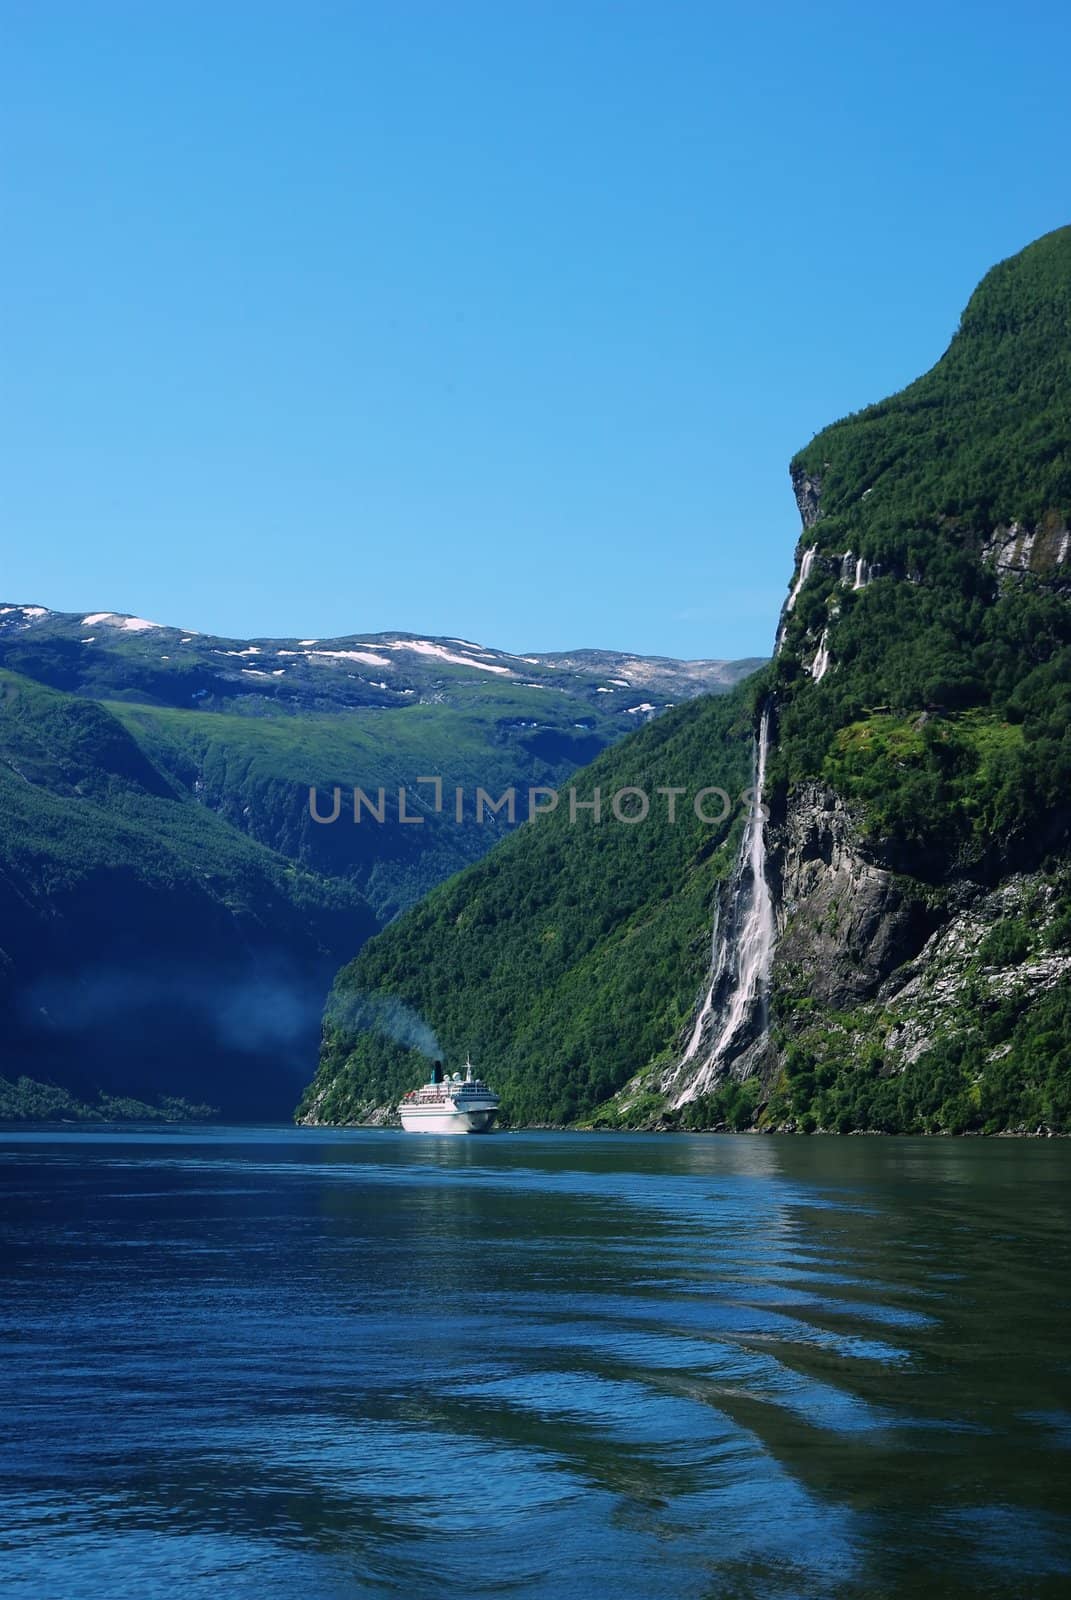 Cruise ship in norwegian fjord